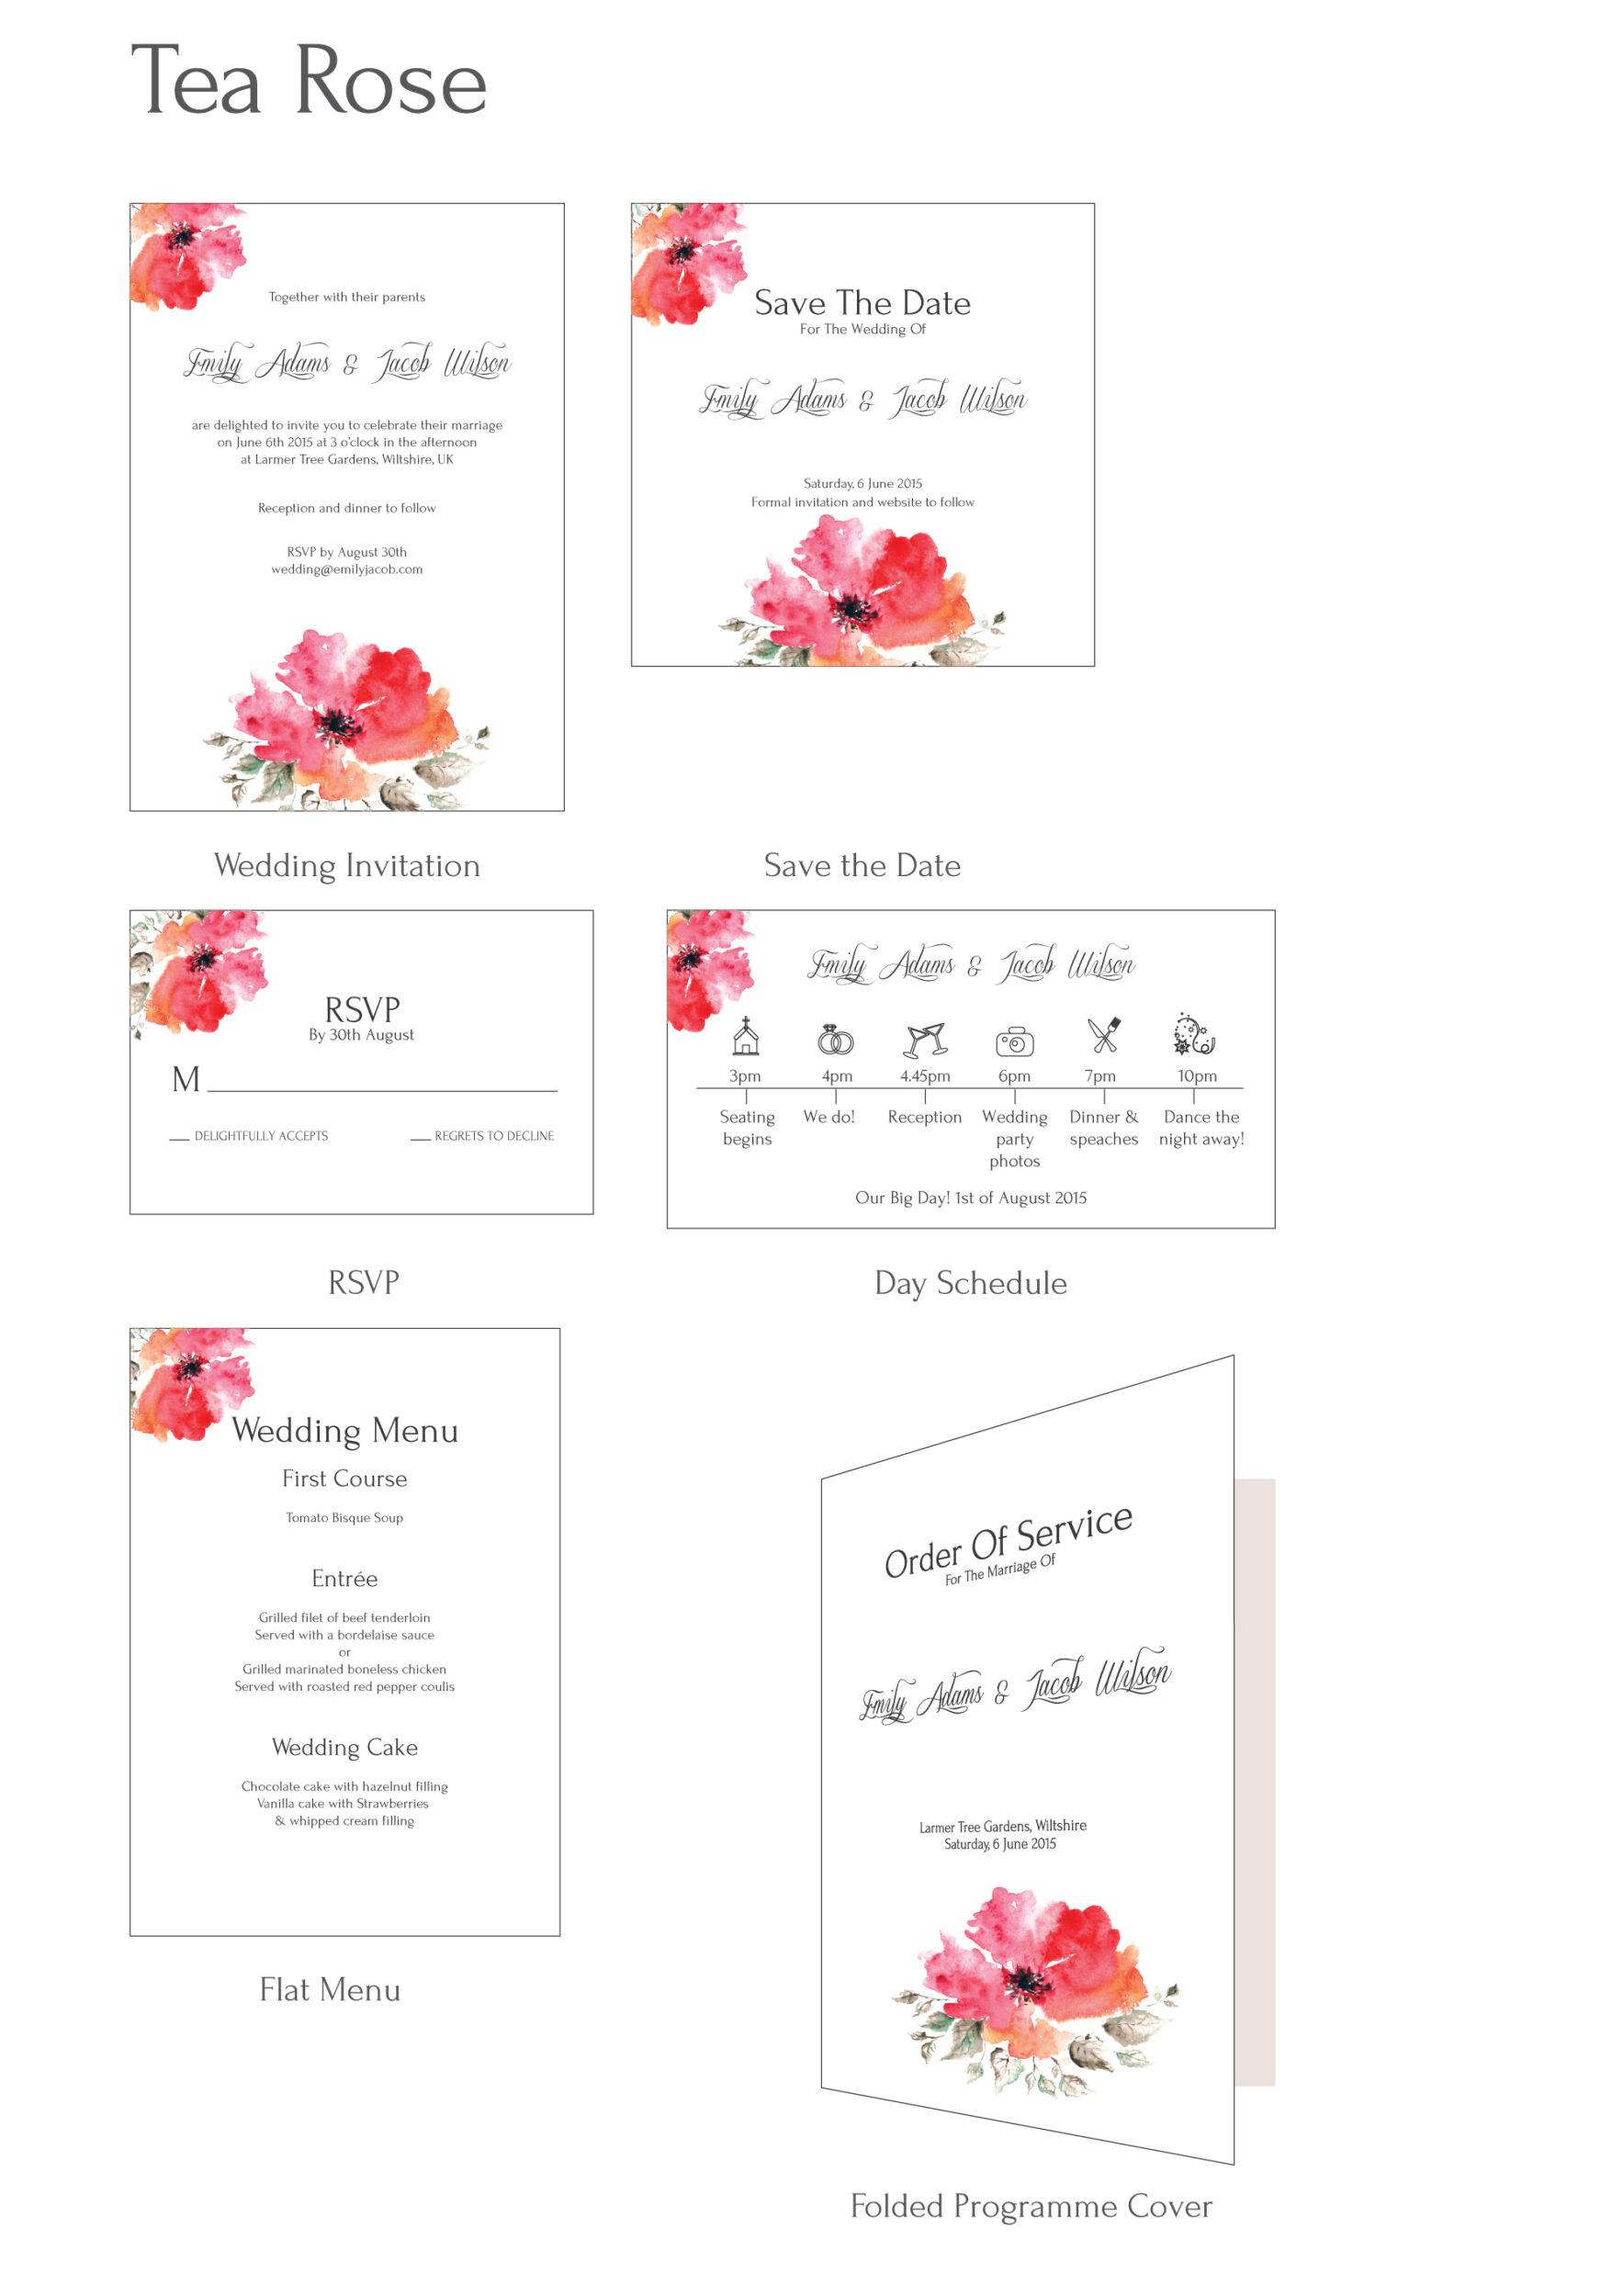 Water Colour wedding invitation-Tea Rose 1